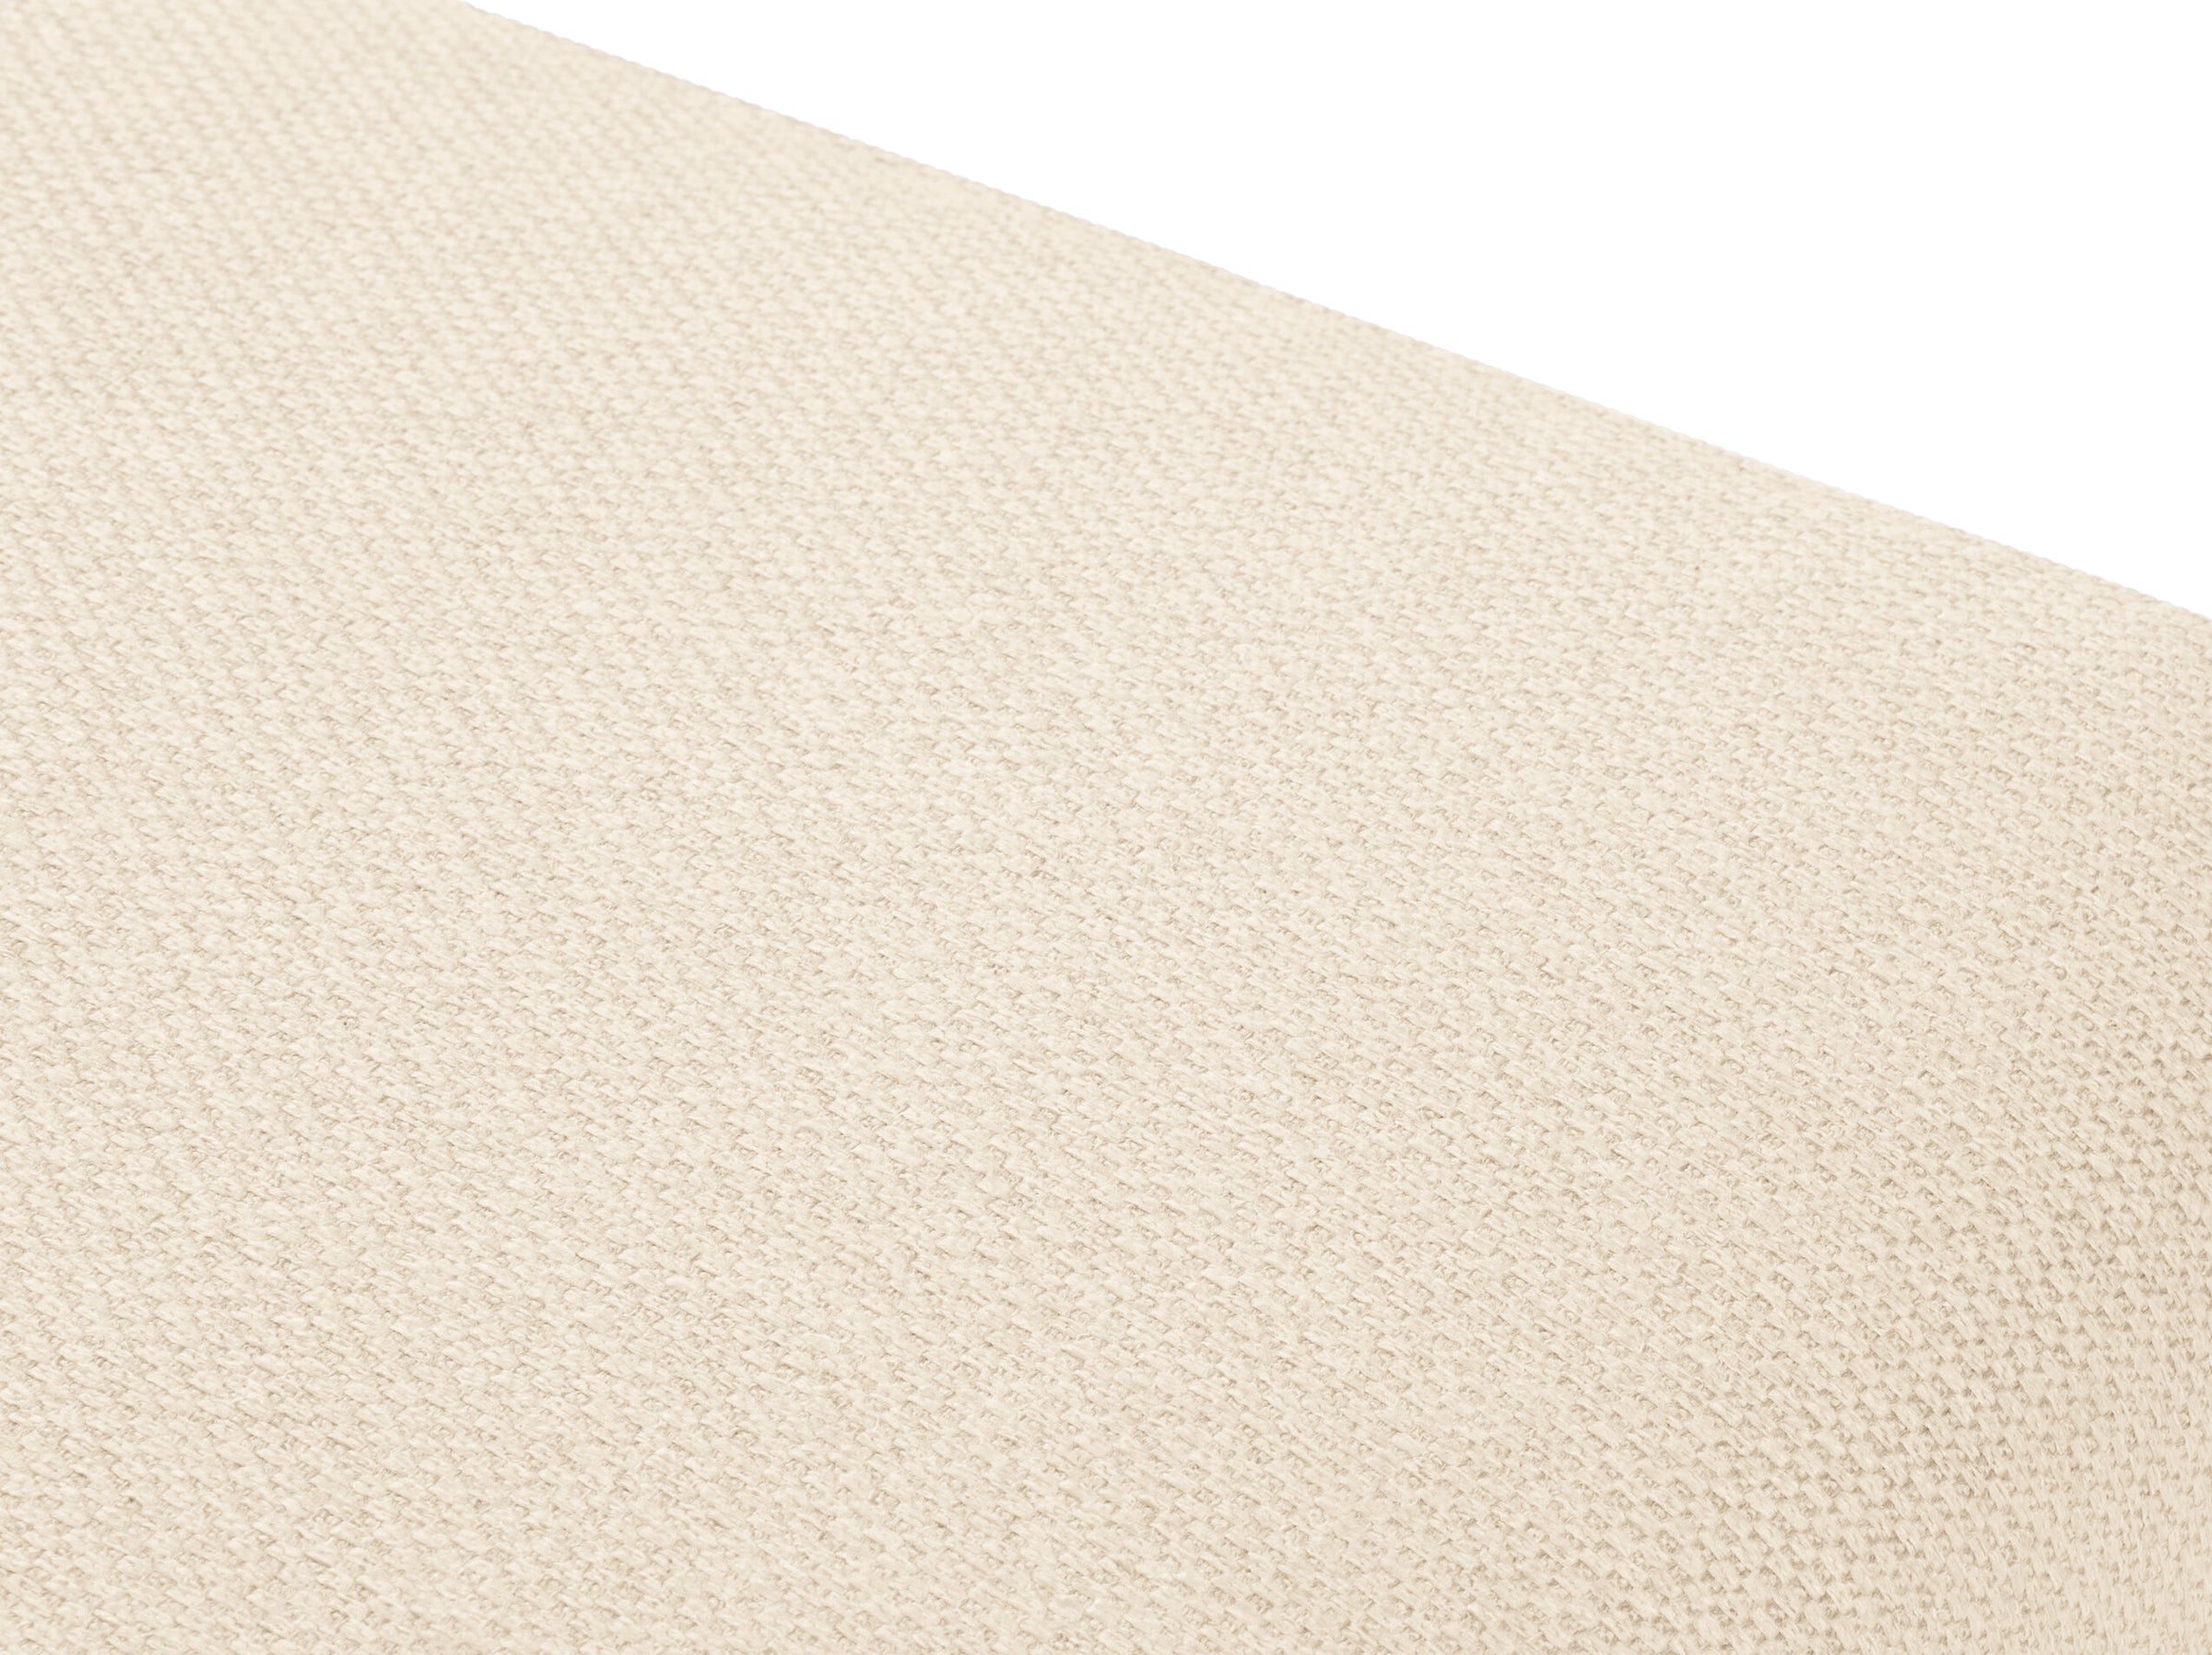 Salto sofas structured fabric beige